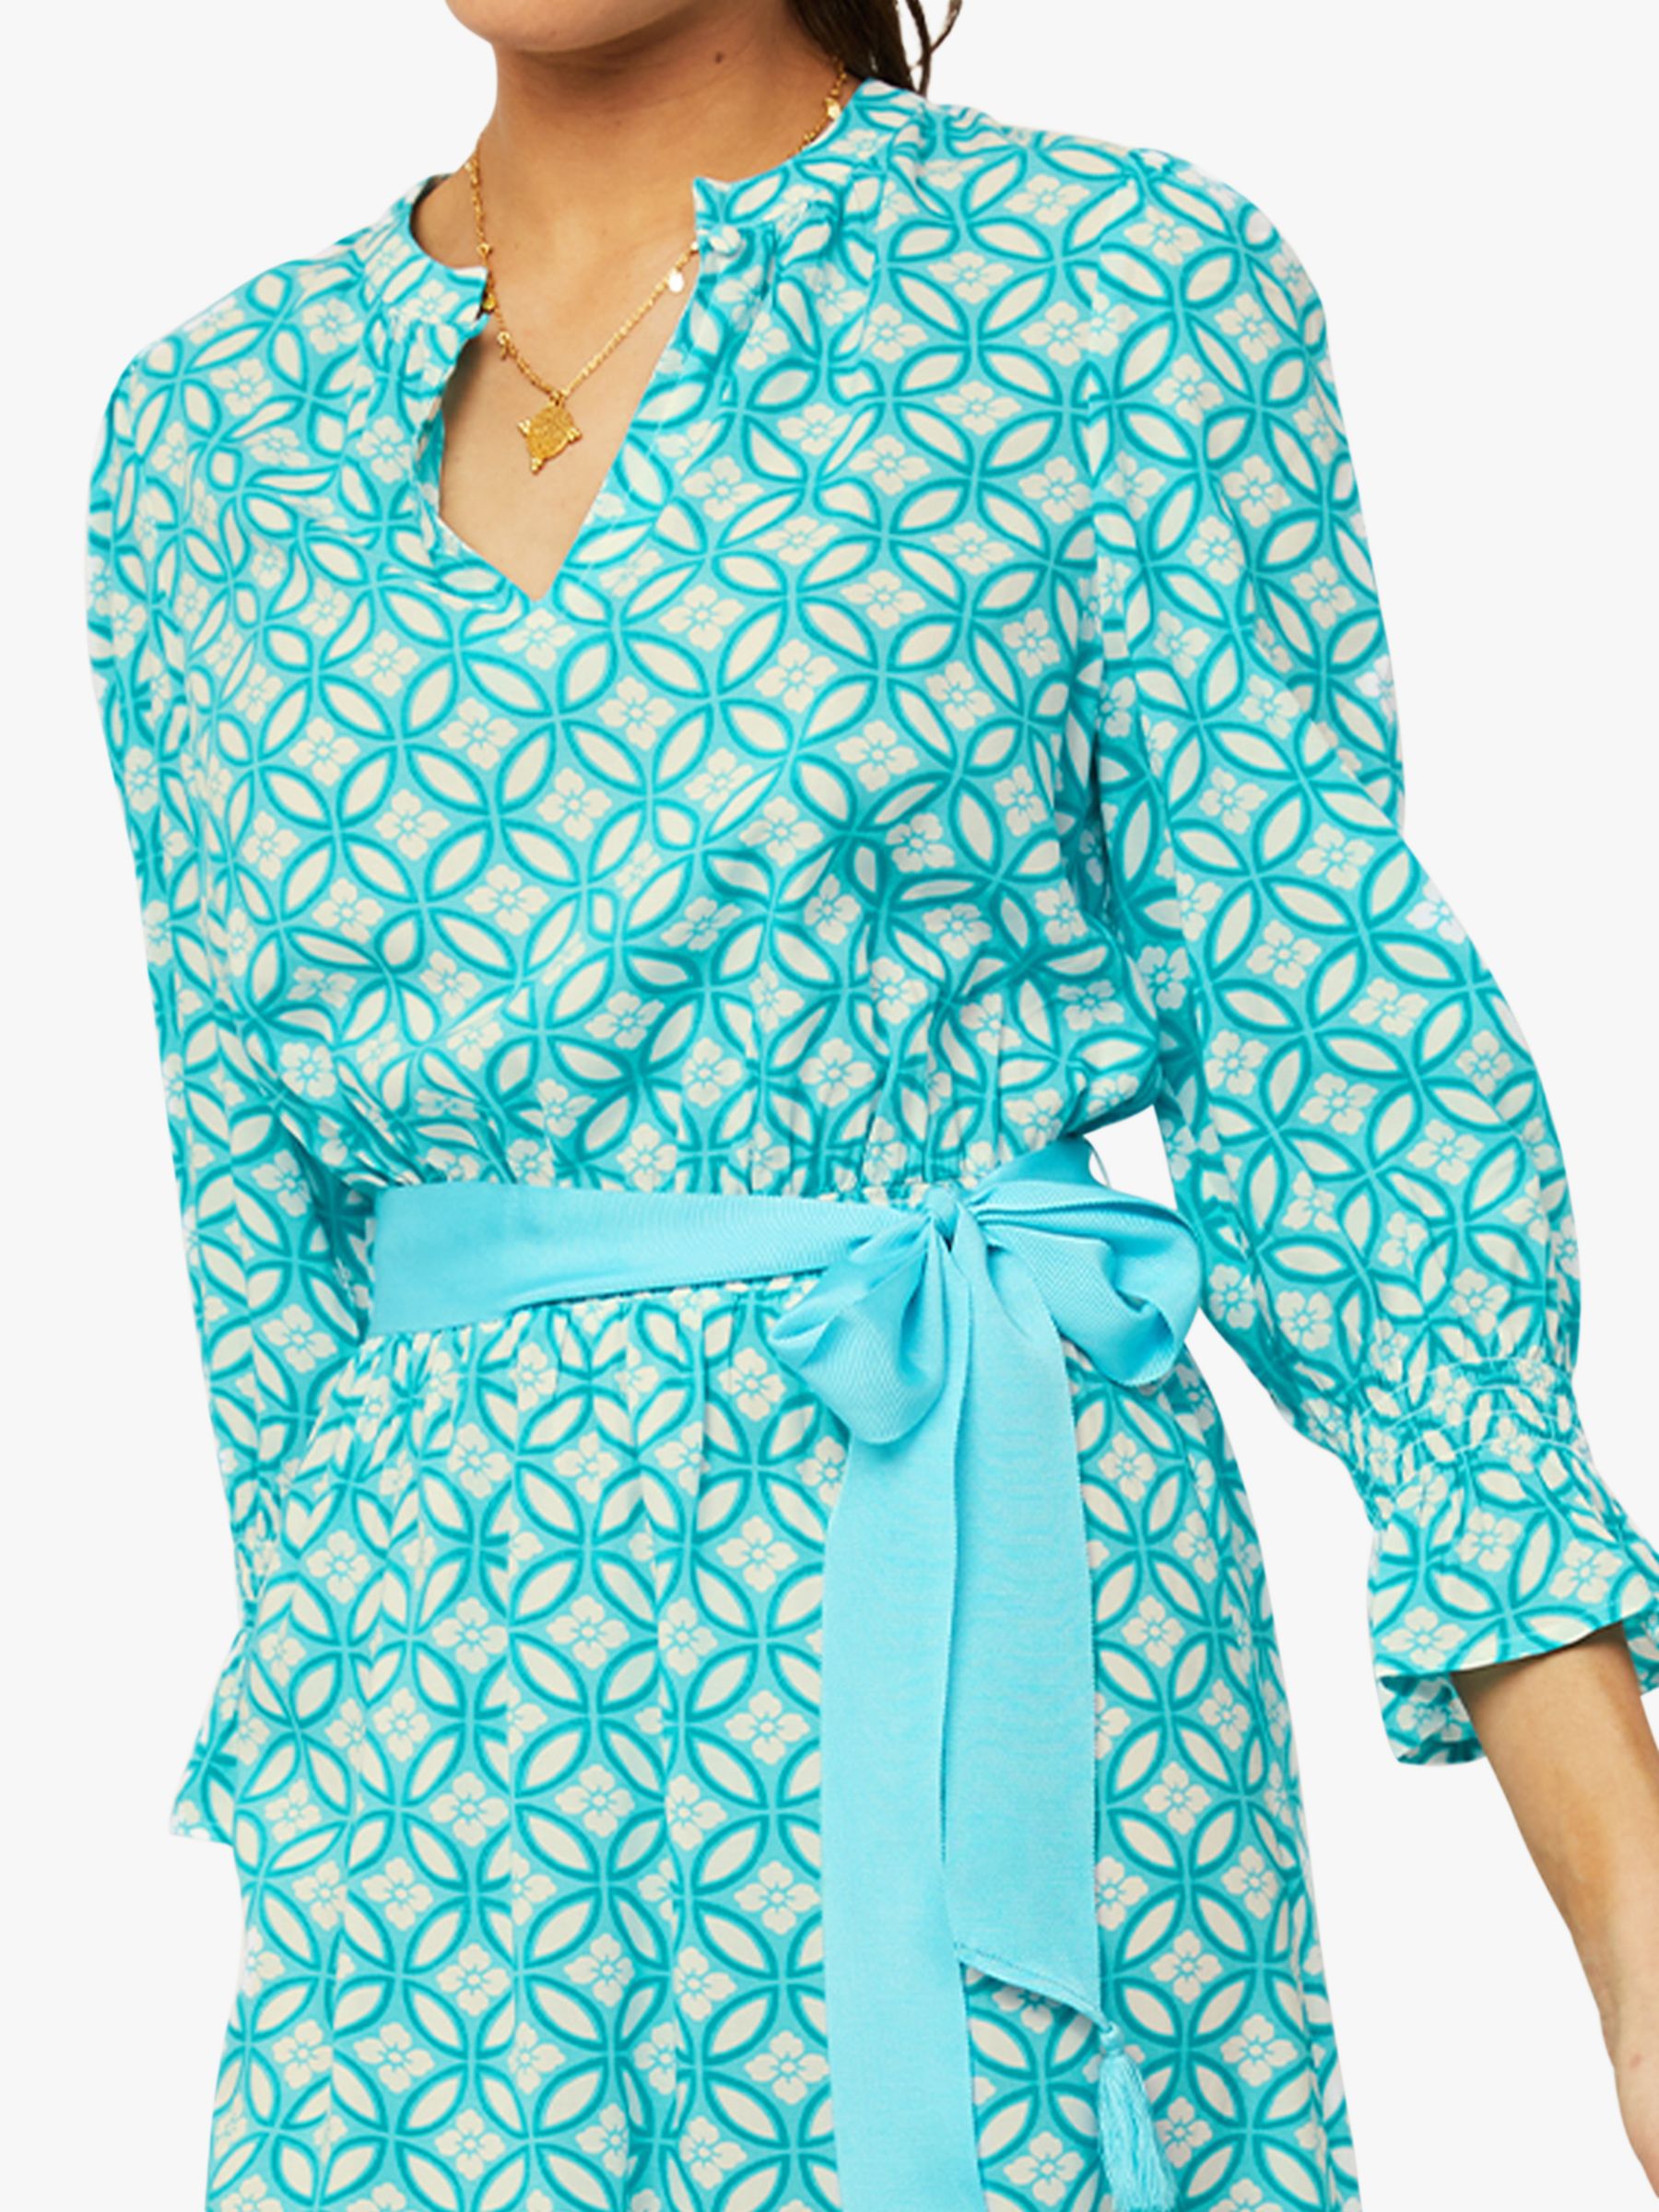 Aspiga Maeve Geometric Print Contrast Belt Maxi Dress, Turquoise/Multi, XS